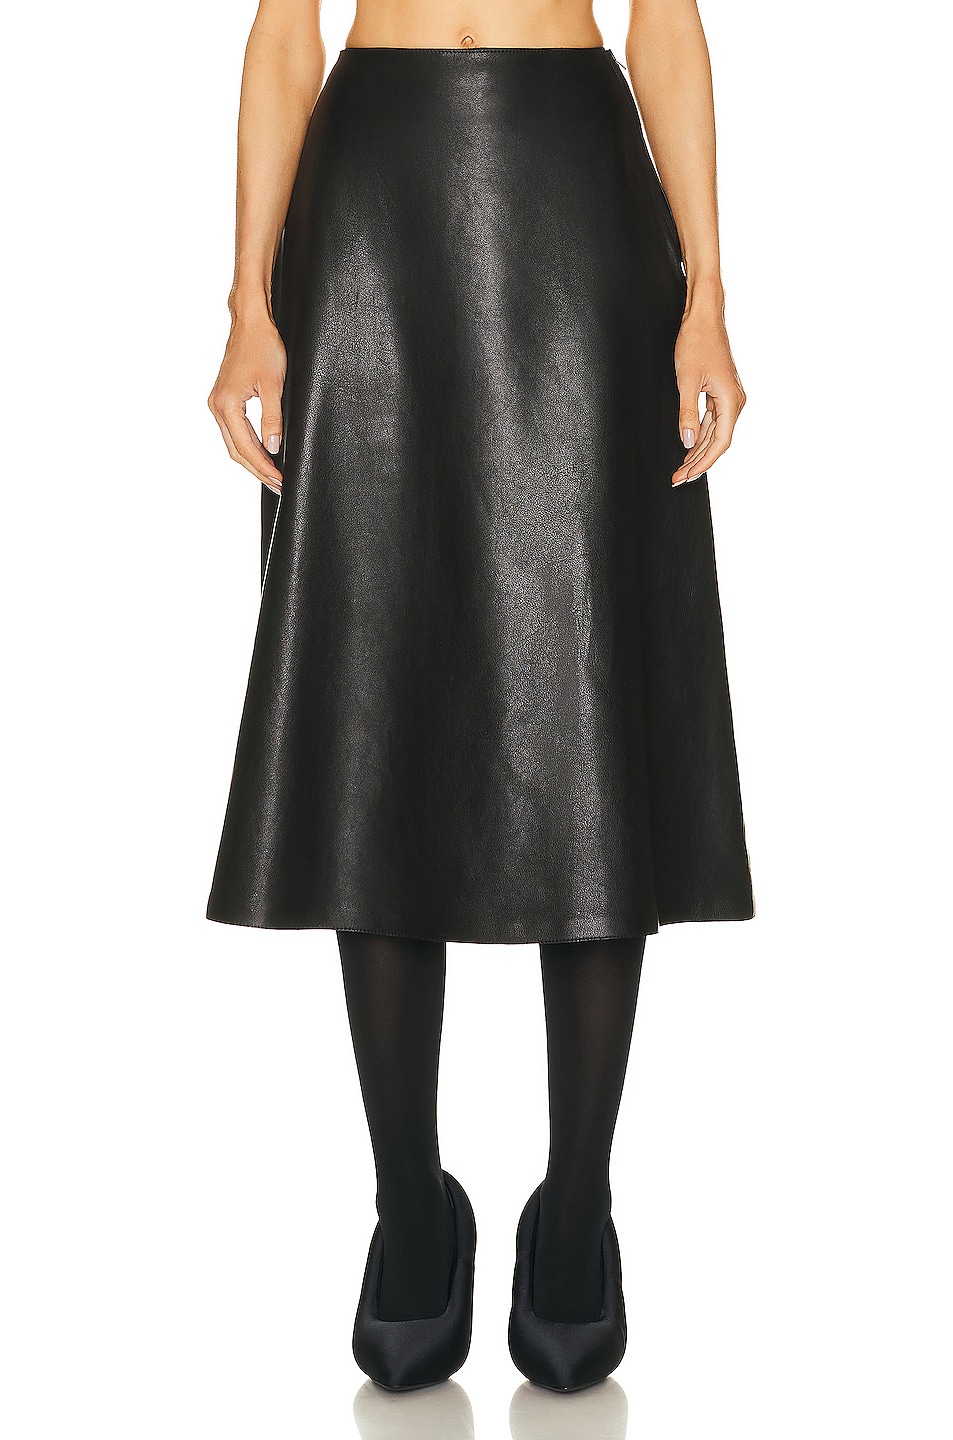 Balenciaga A-Line Leather Skirt in Black | FWRD